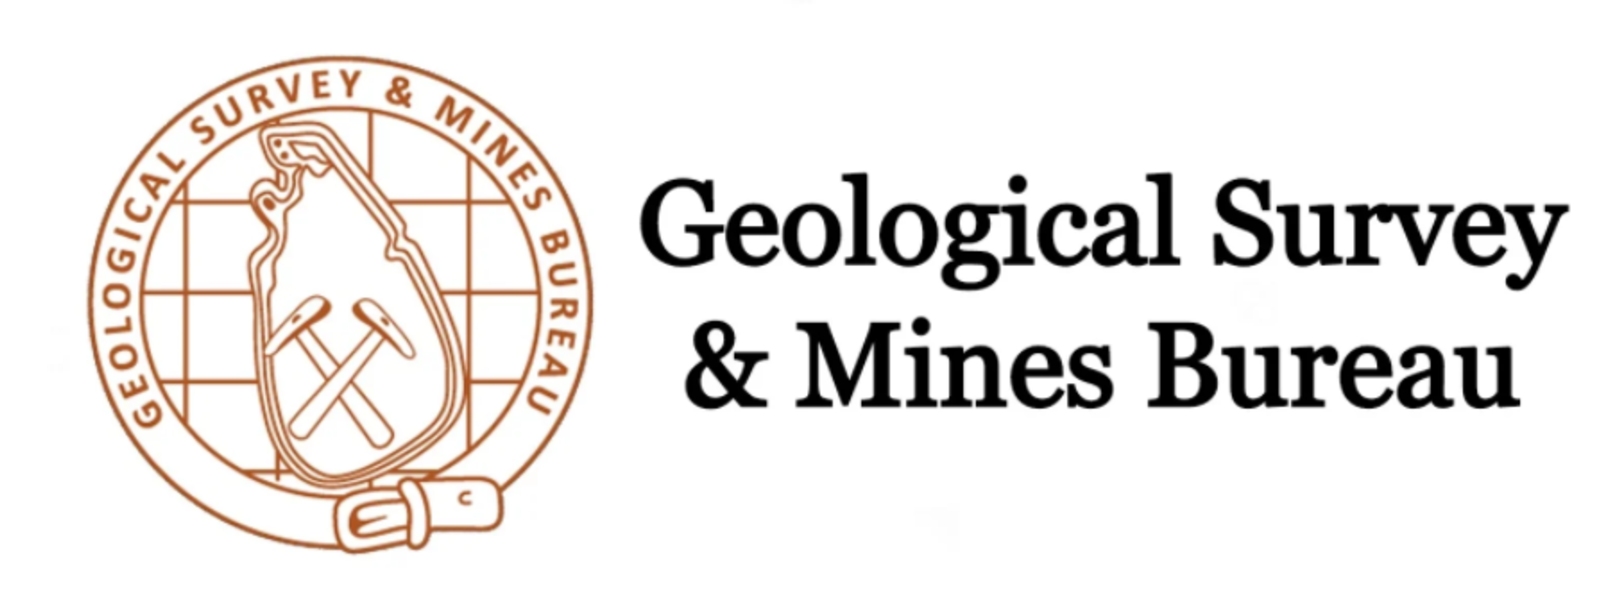 Geological Survey and Mines Bureau investigating minor tremor